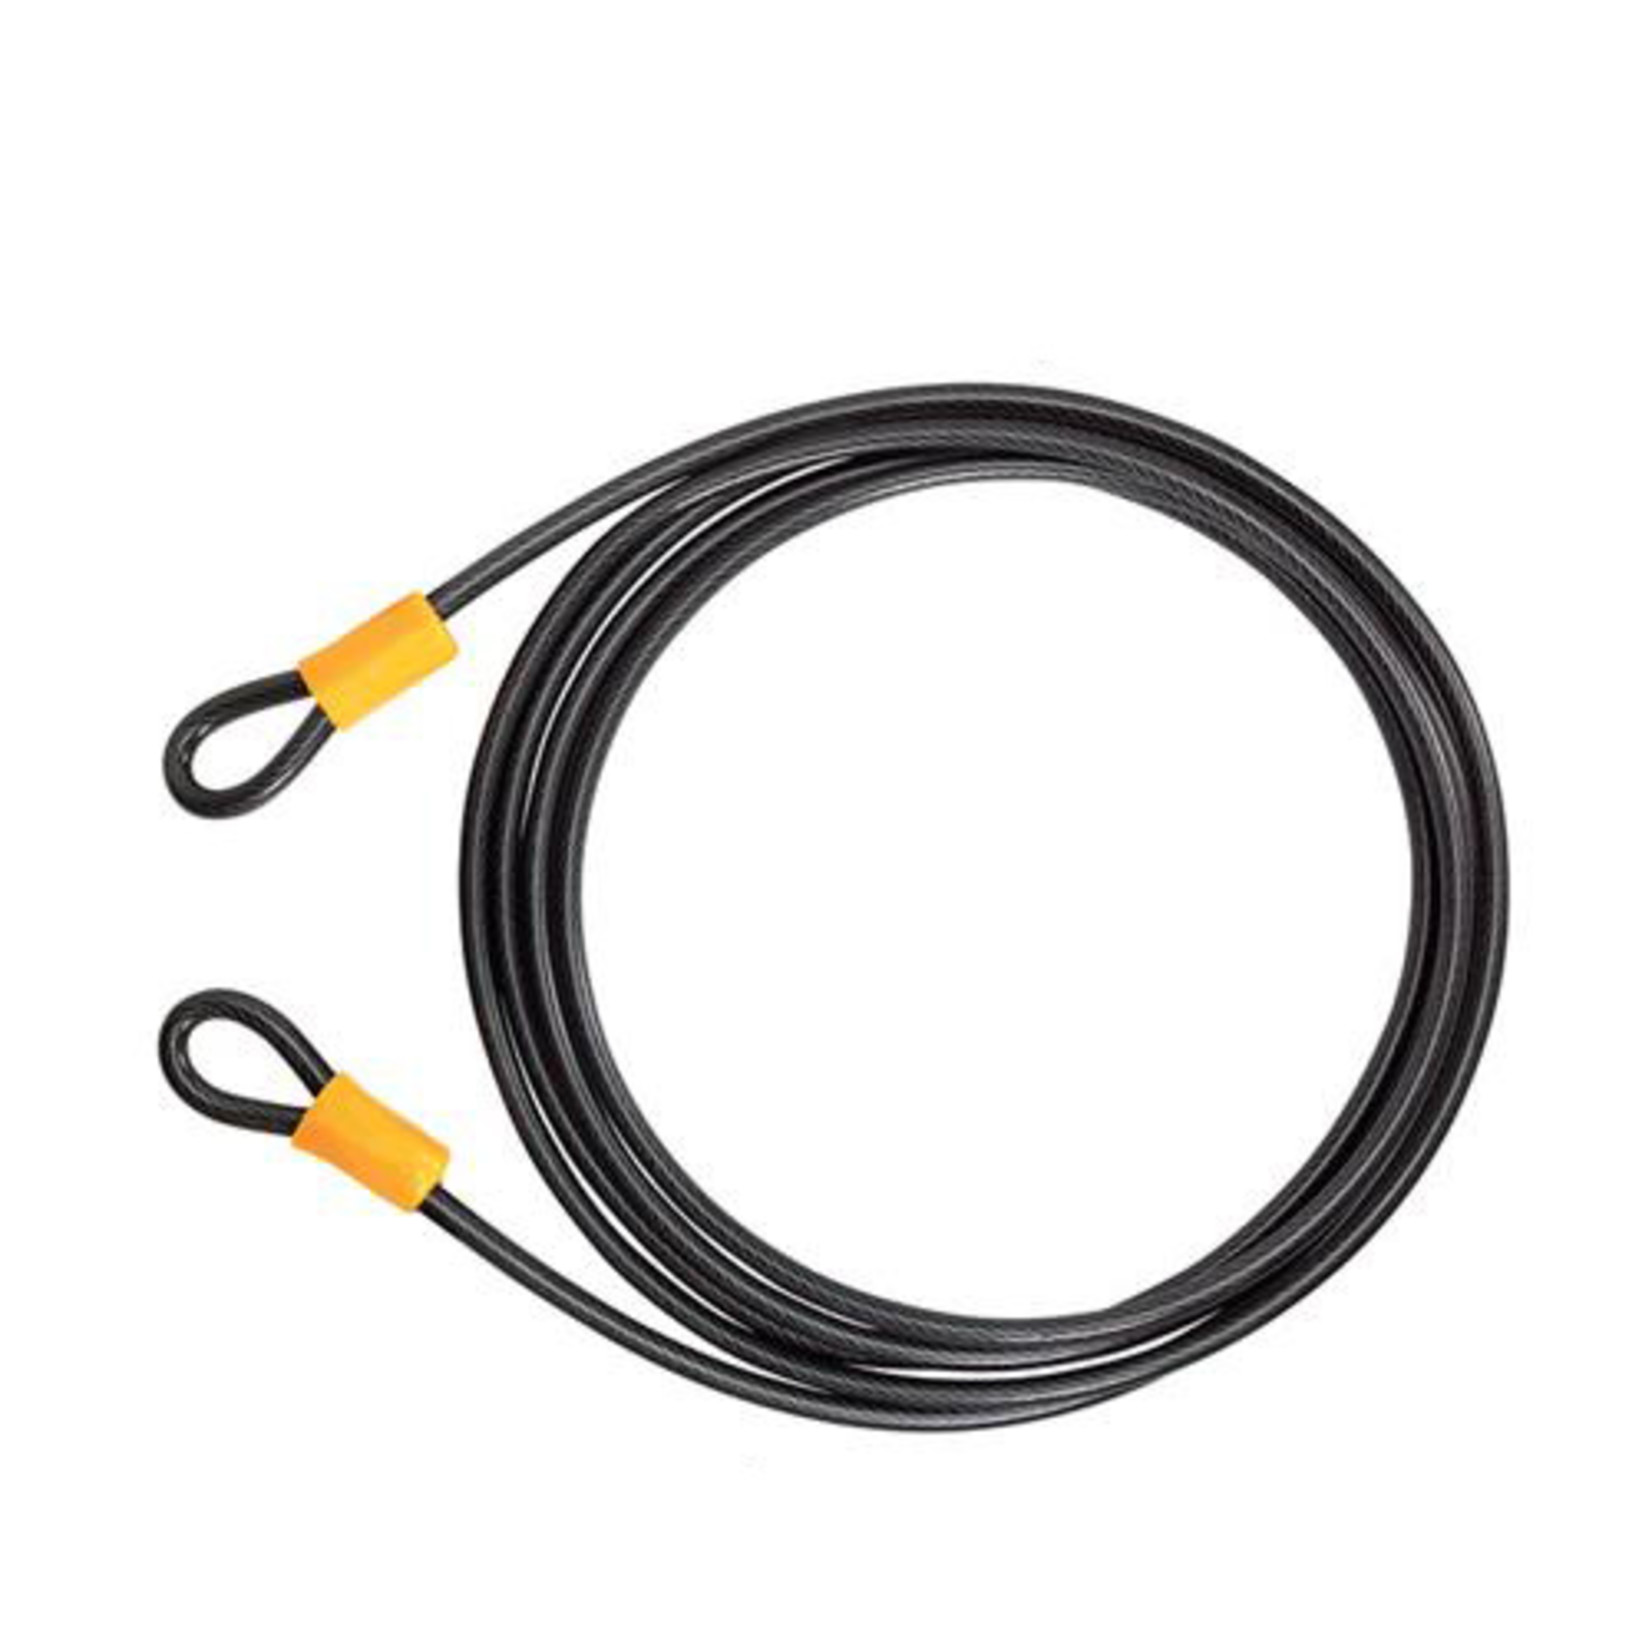 Onguard Onguard Bike/Cycling Lock - Akita Series - Long Cable - 4.6m X 10mm